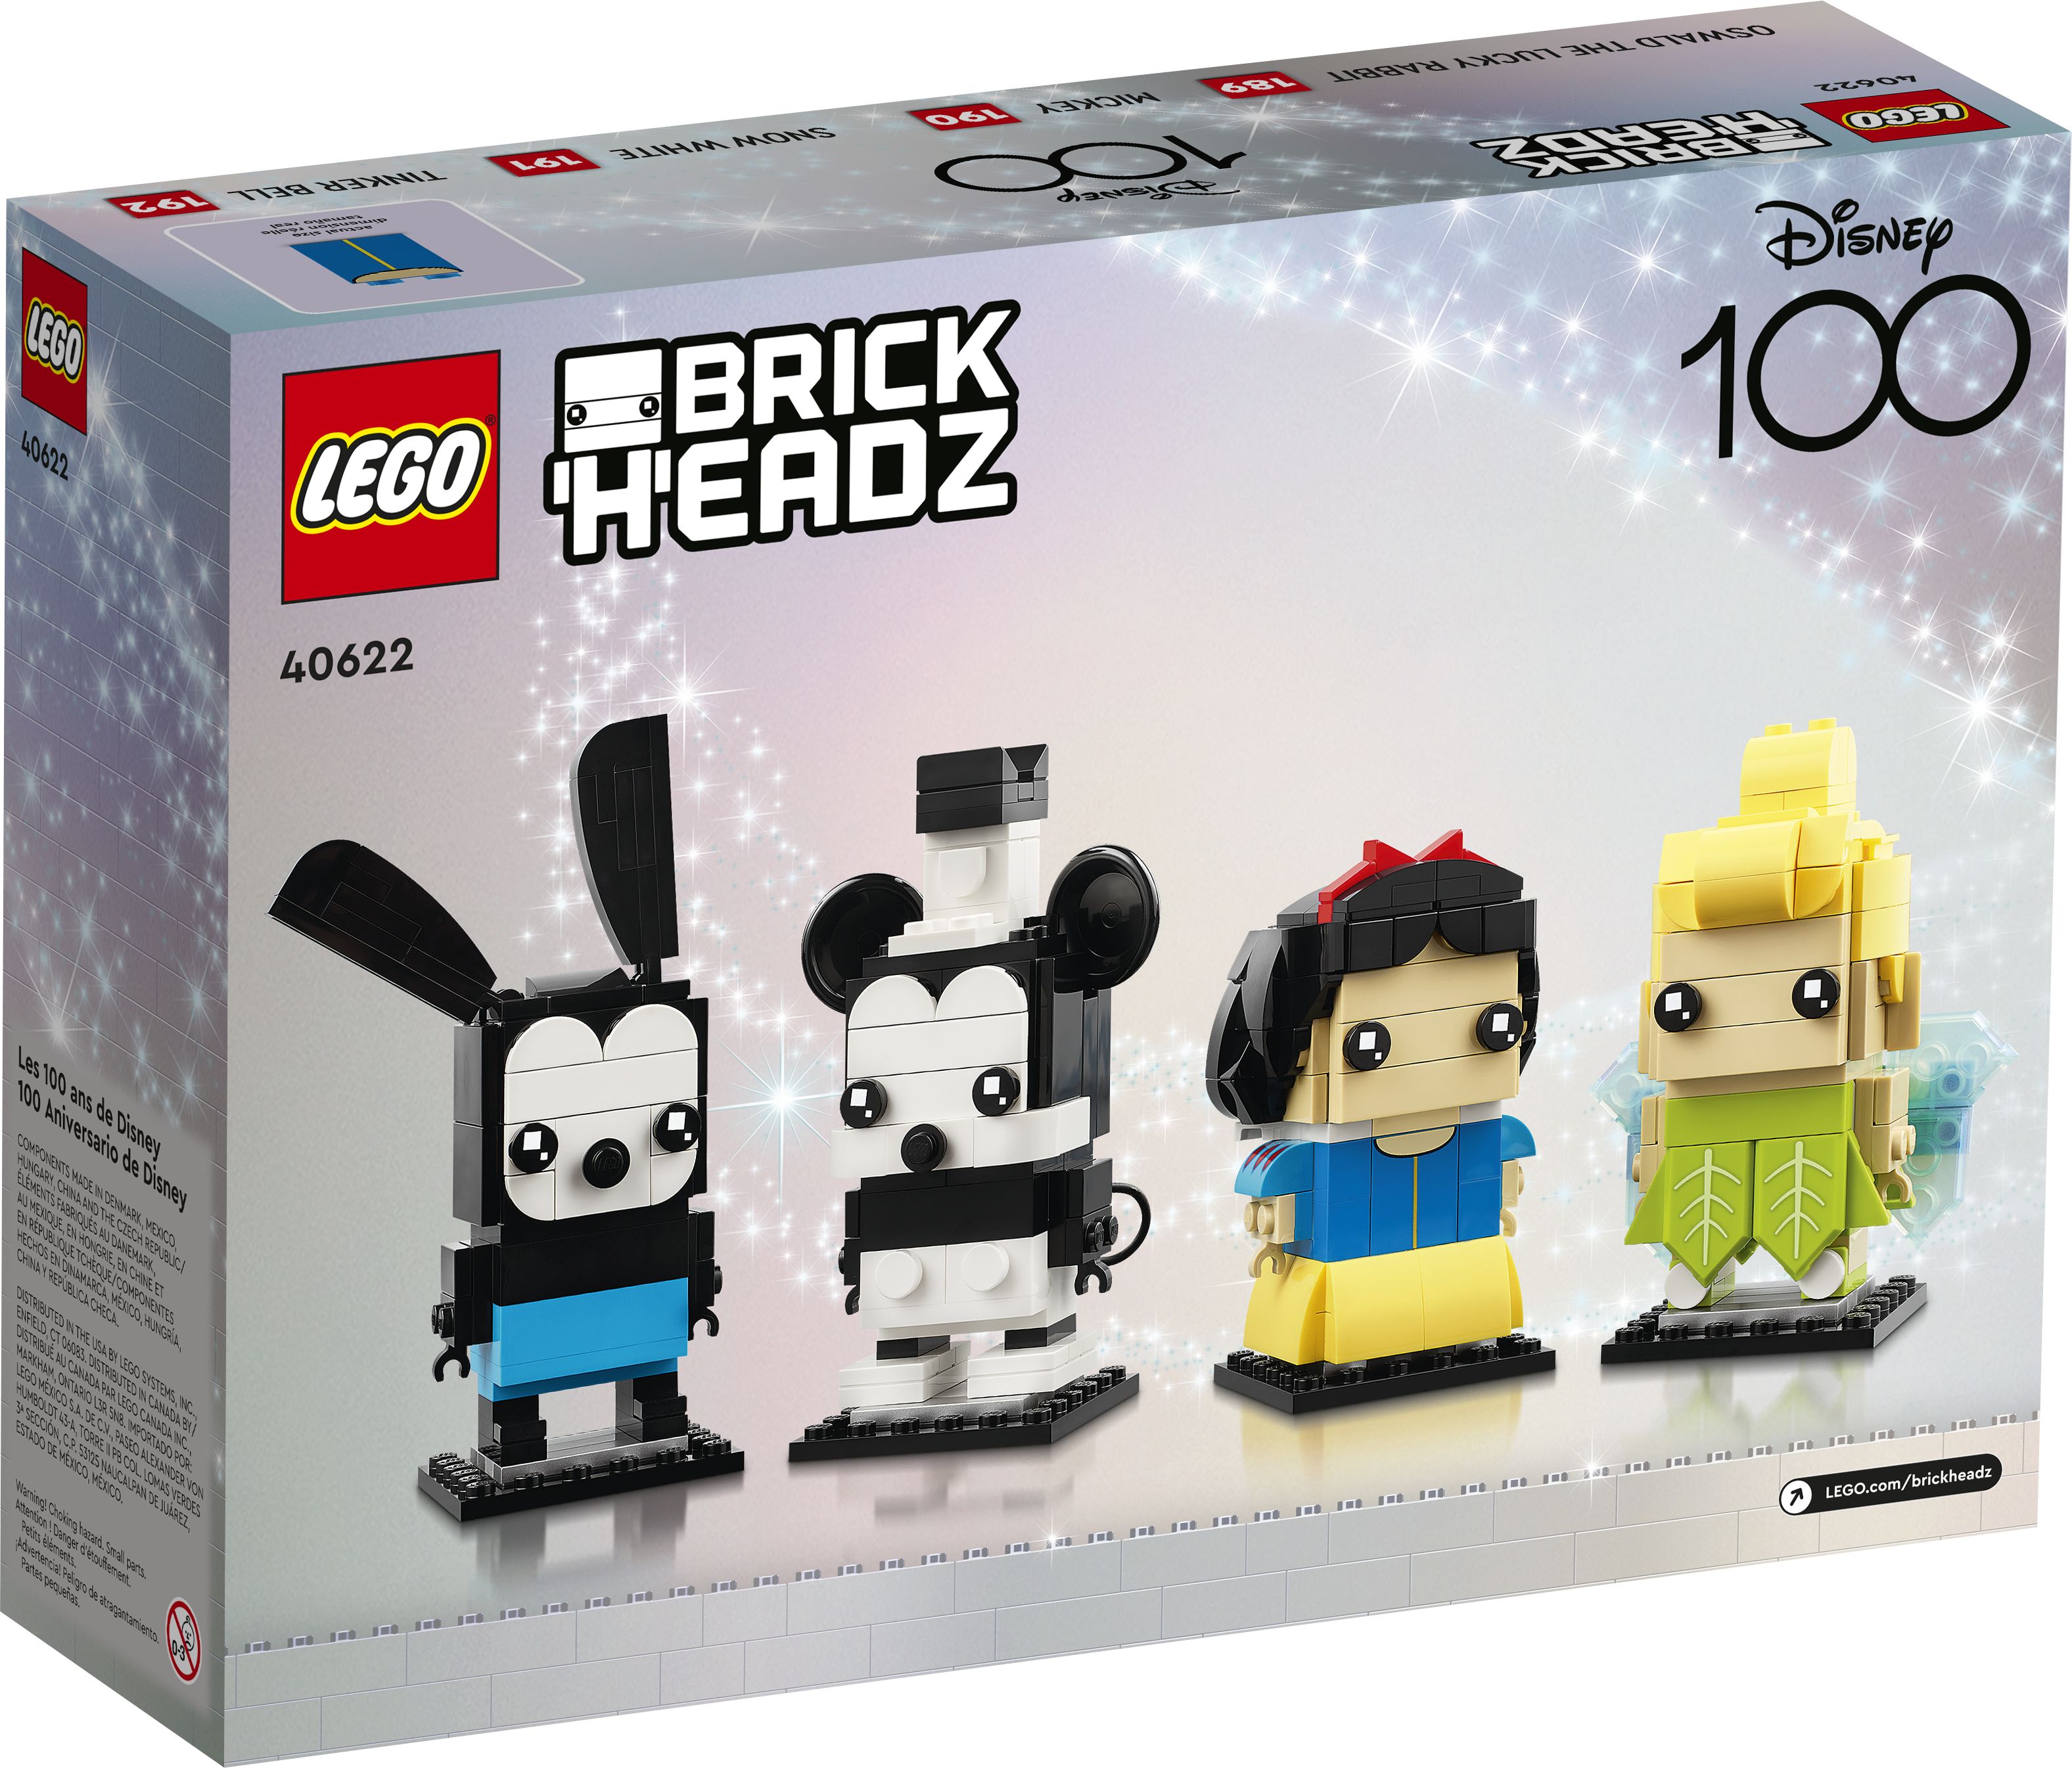 LEGO BrickHeadz 40622 100-jähriges Disney Jubiläum LEGO_40622_Box5_v39.jpg